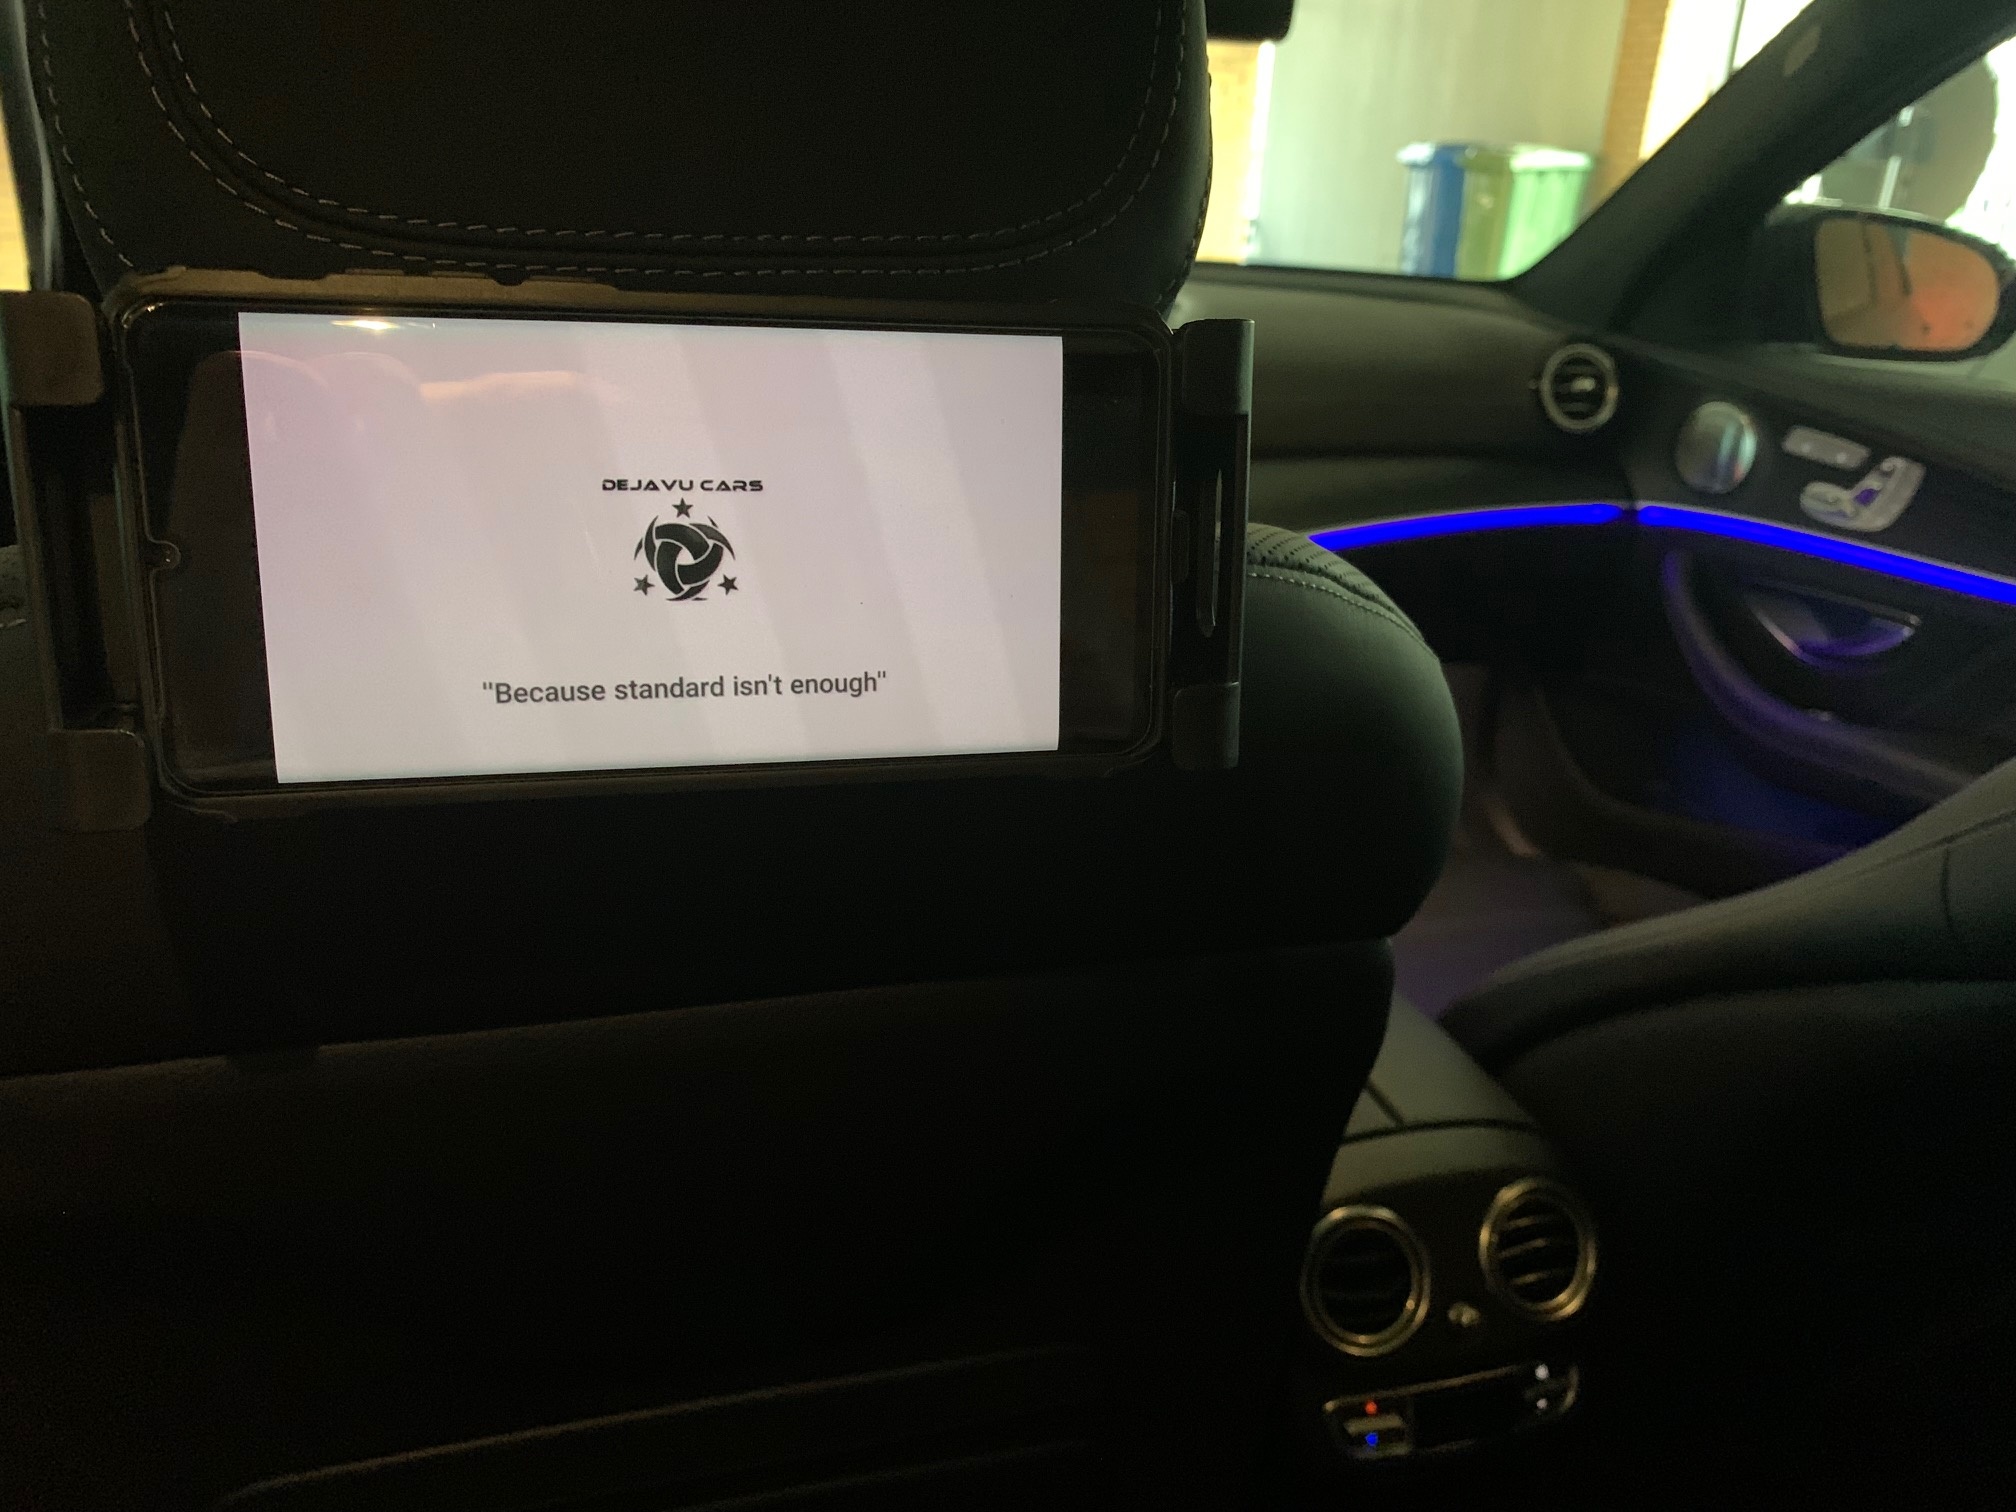 iPad Tablet Halterung Kopfstütze Kinder Unterhaltung Auto LKW PKW Hal